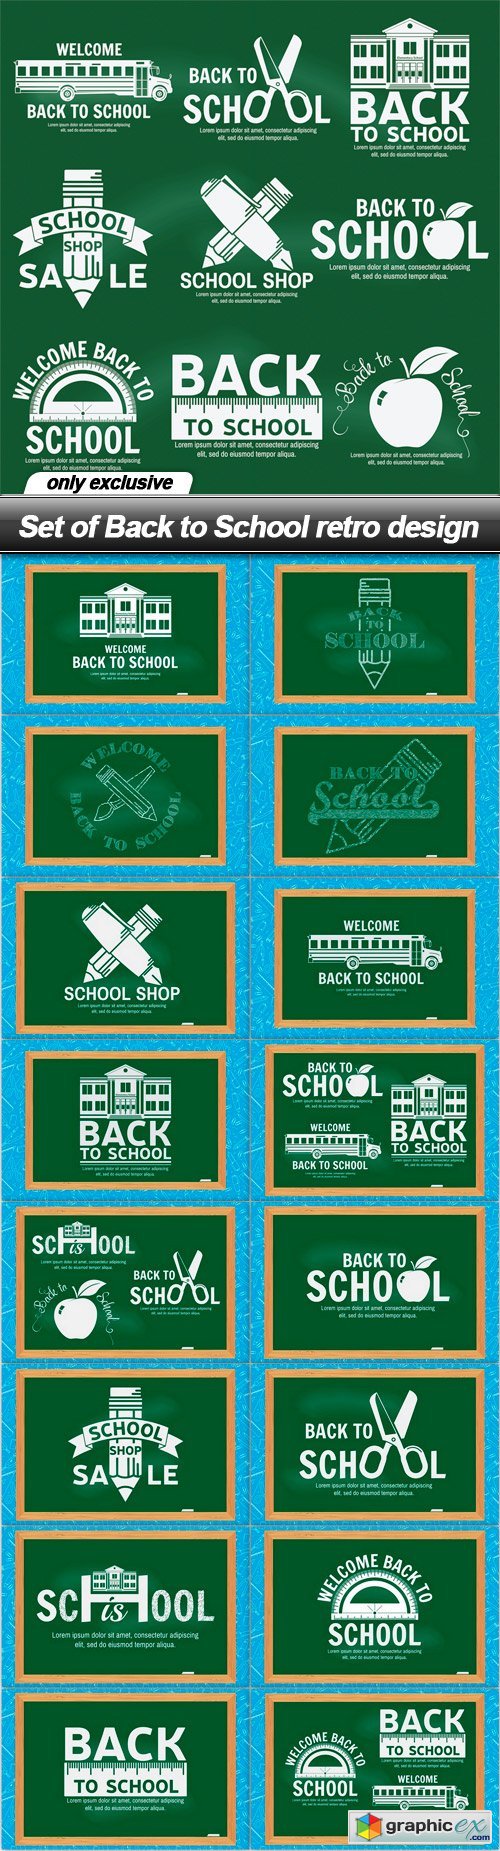 Set of Back to School retro design - 17 EPS